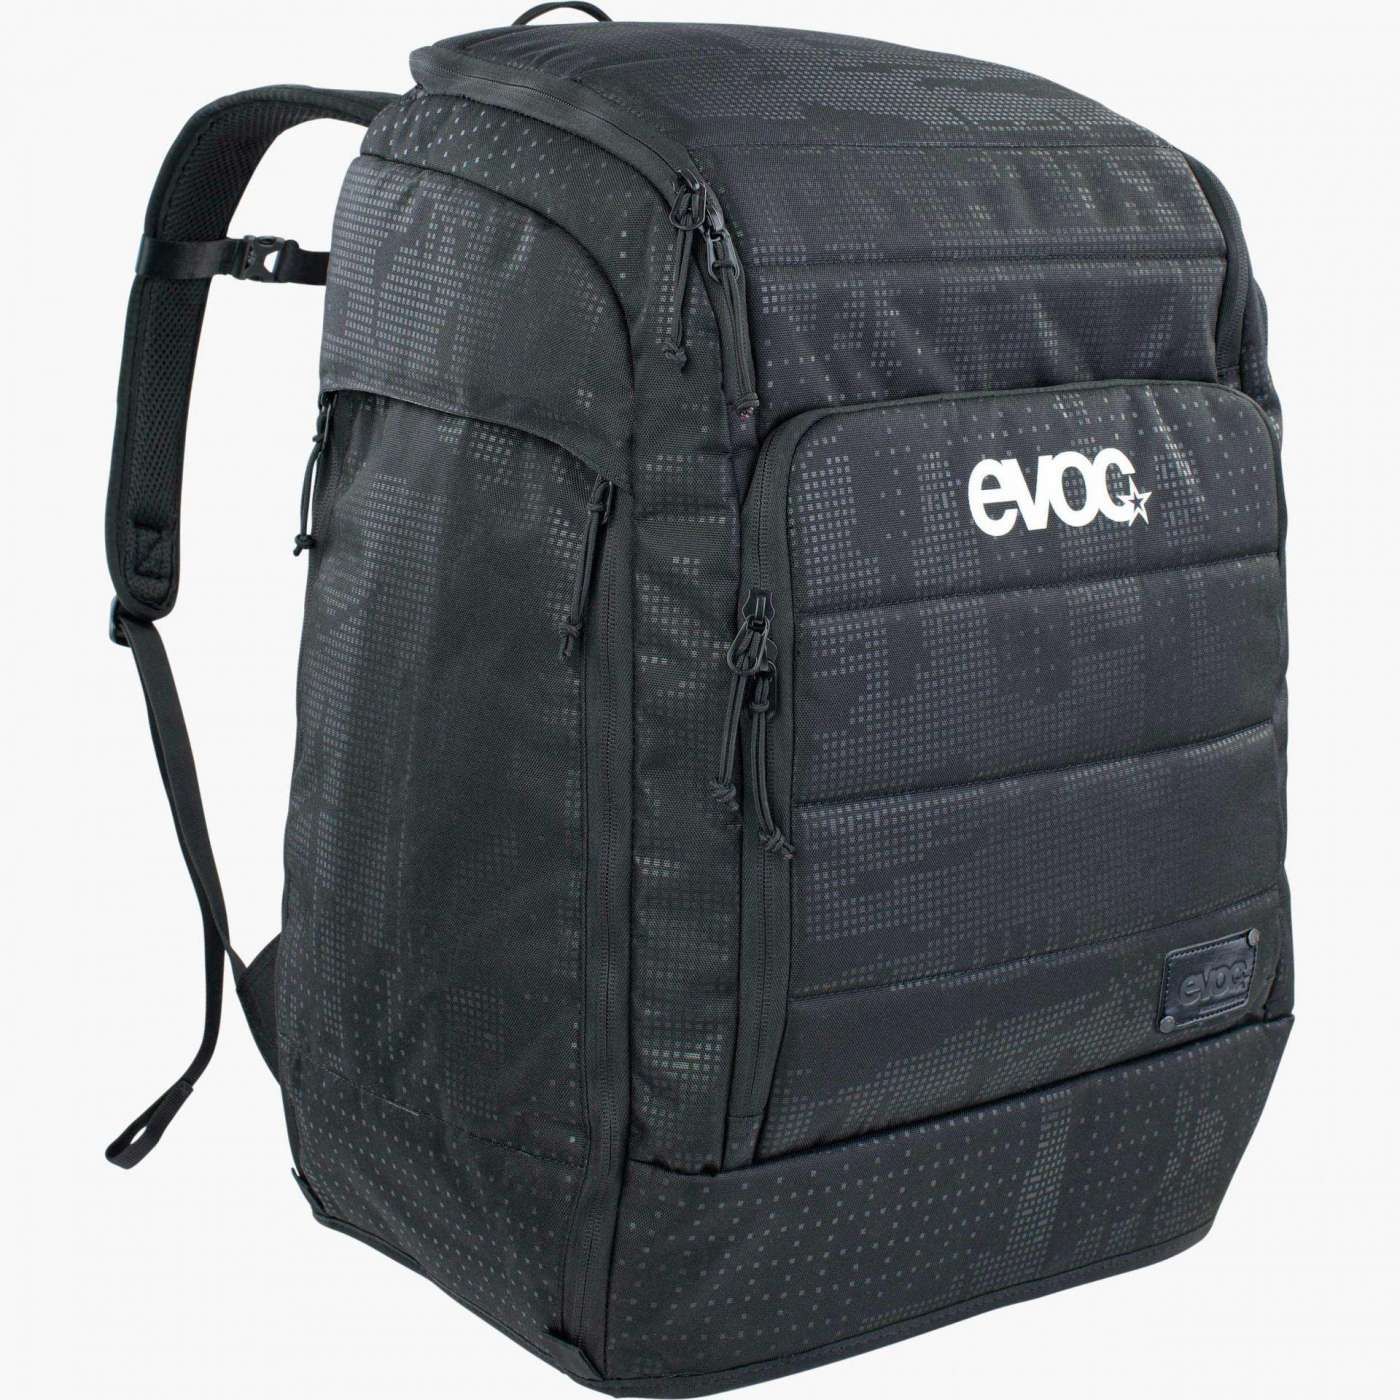 Evoc Reppu Gear Backpack, Black